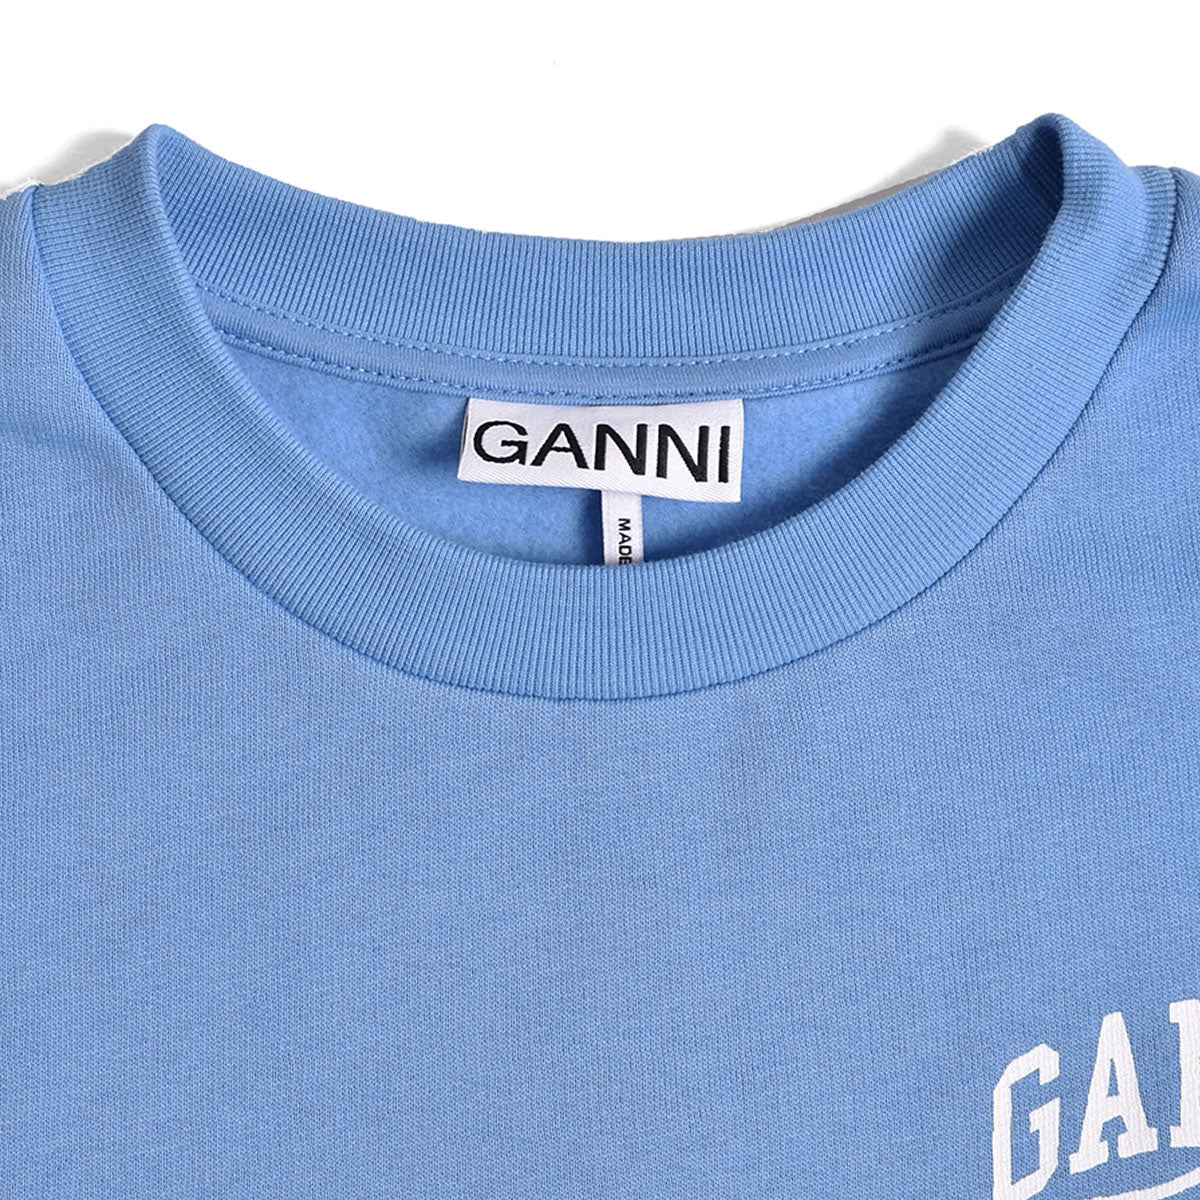 GANNI]Isoli Gnanni Shield Oversized Sweatshirt/LIGHT BLUE(T3656